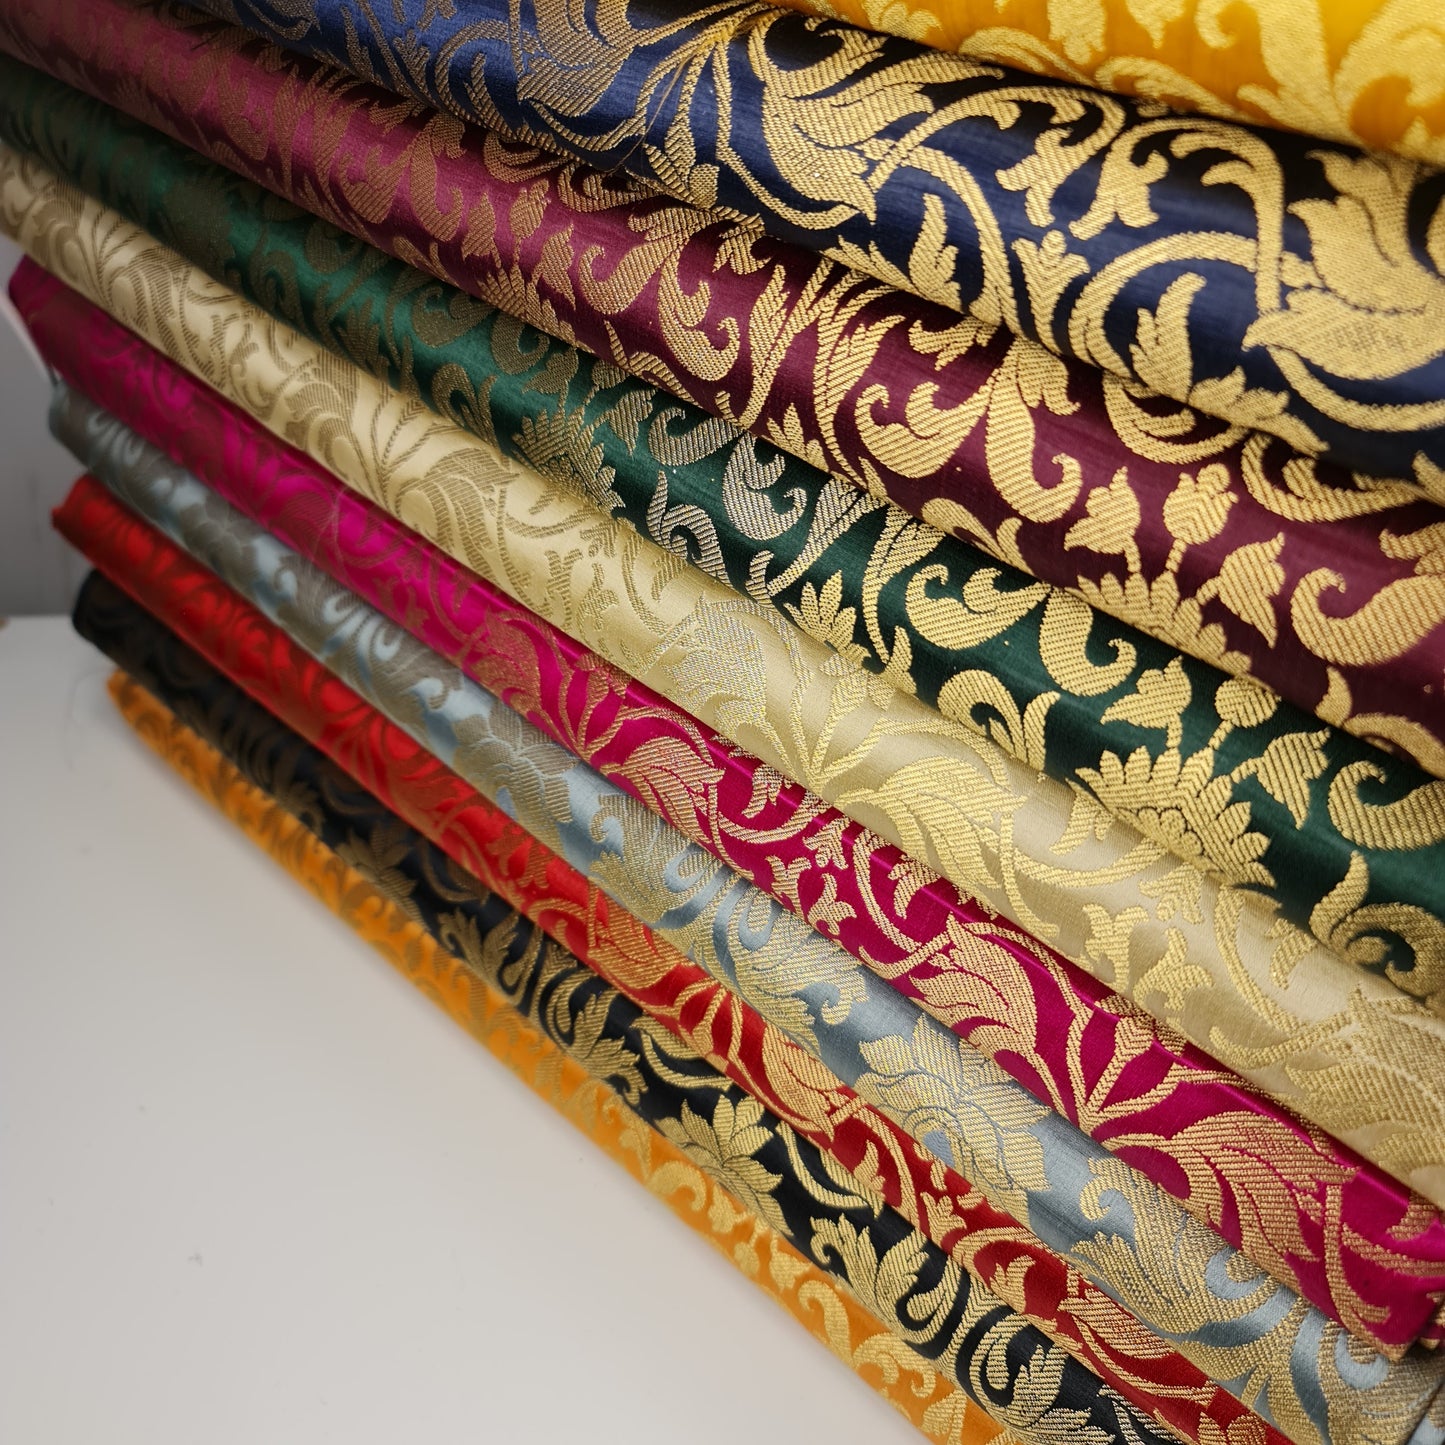 Luxurious Floral Gold Metallic Indian Banarasi Brocade Fabric 44" By The Meter (Turquoise)